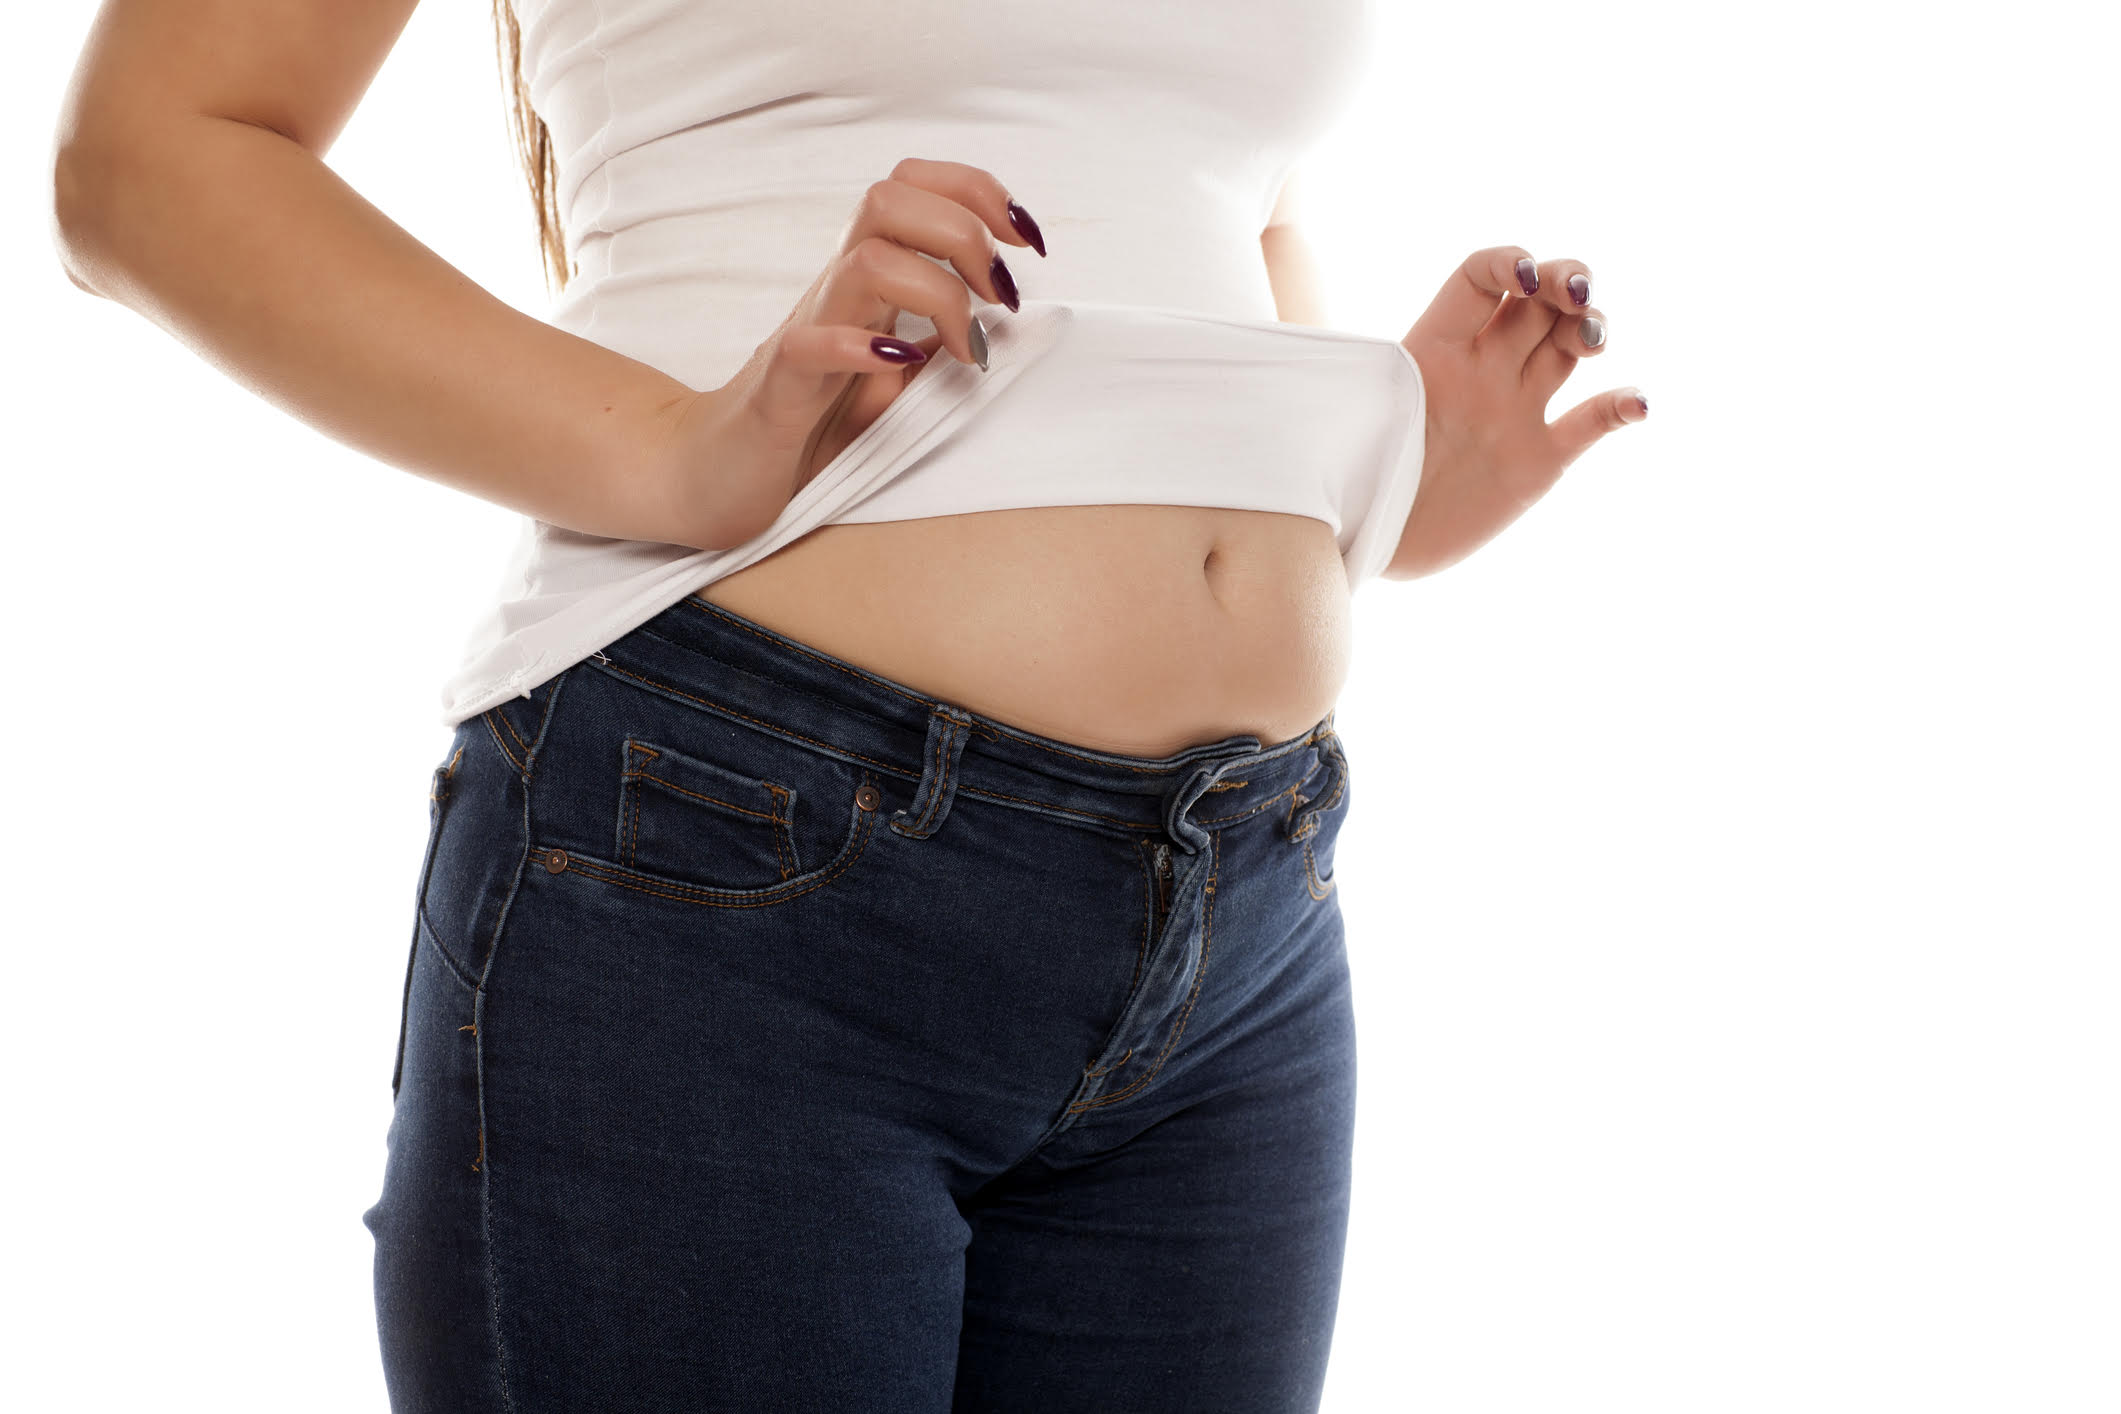 4 Easy Ways to Beat Belly Bloat - Manuel Villacorta Weight Loss Expert